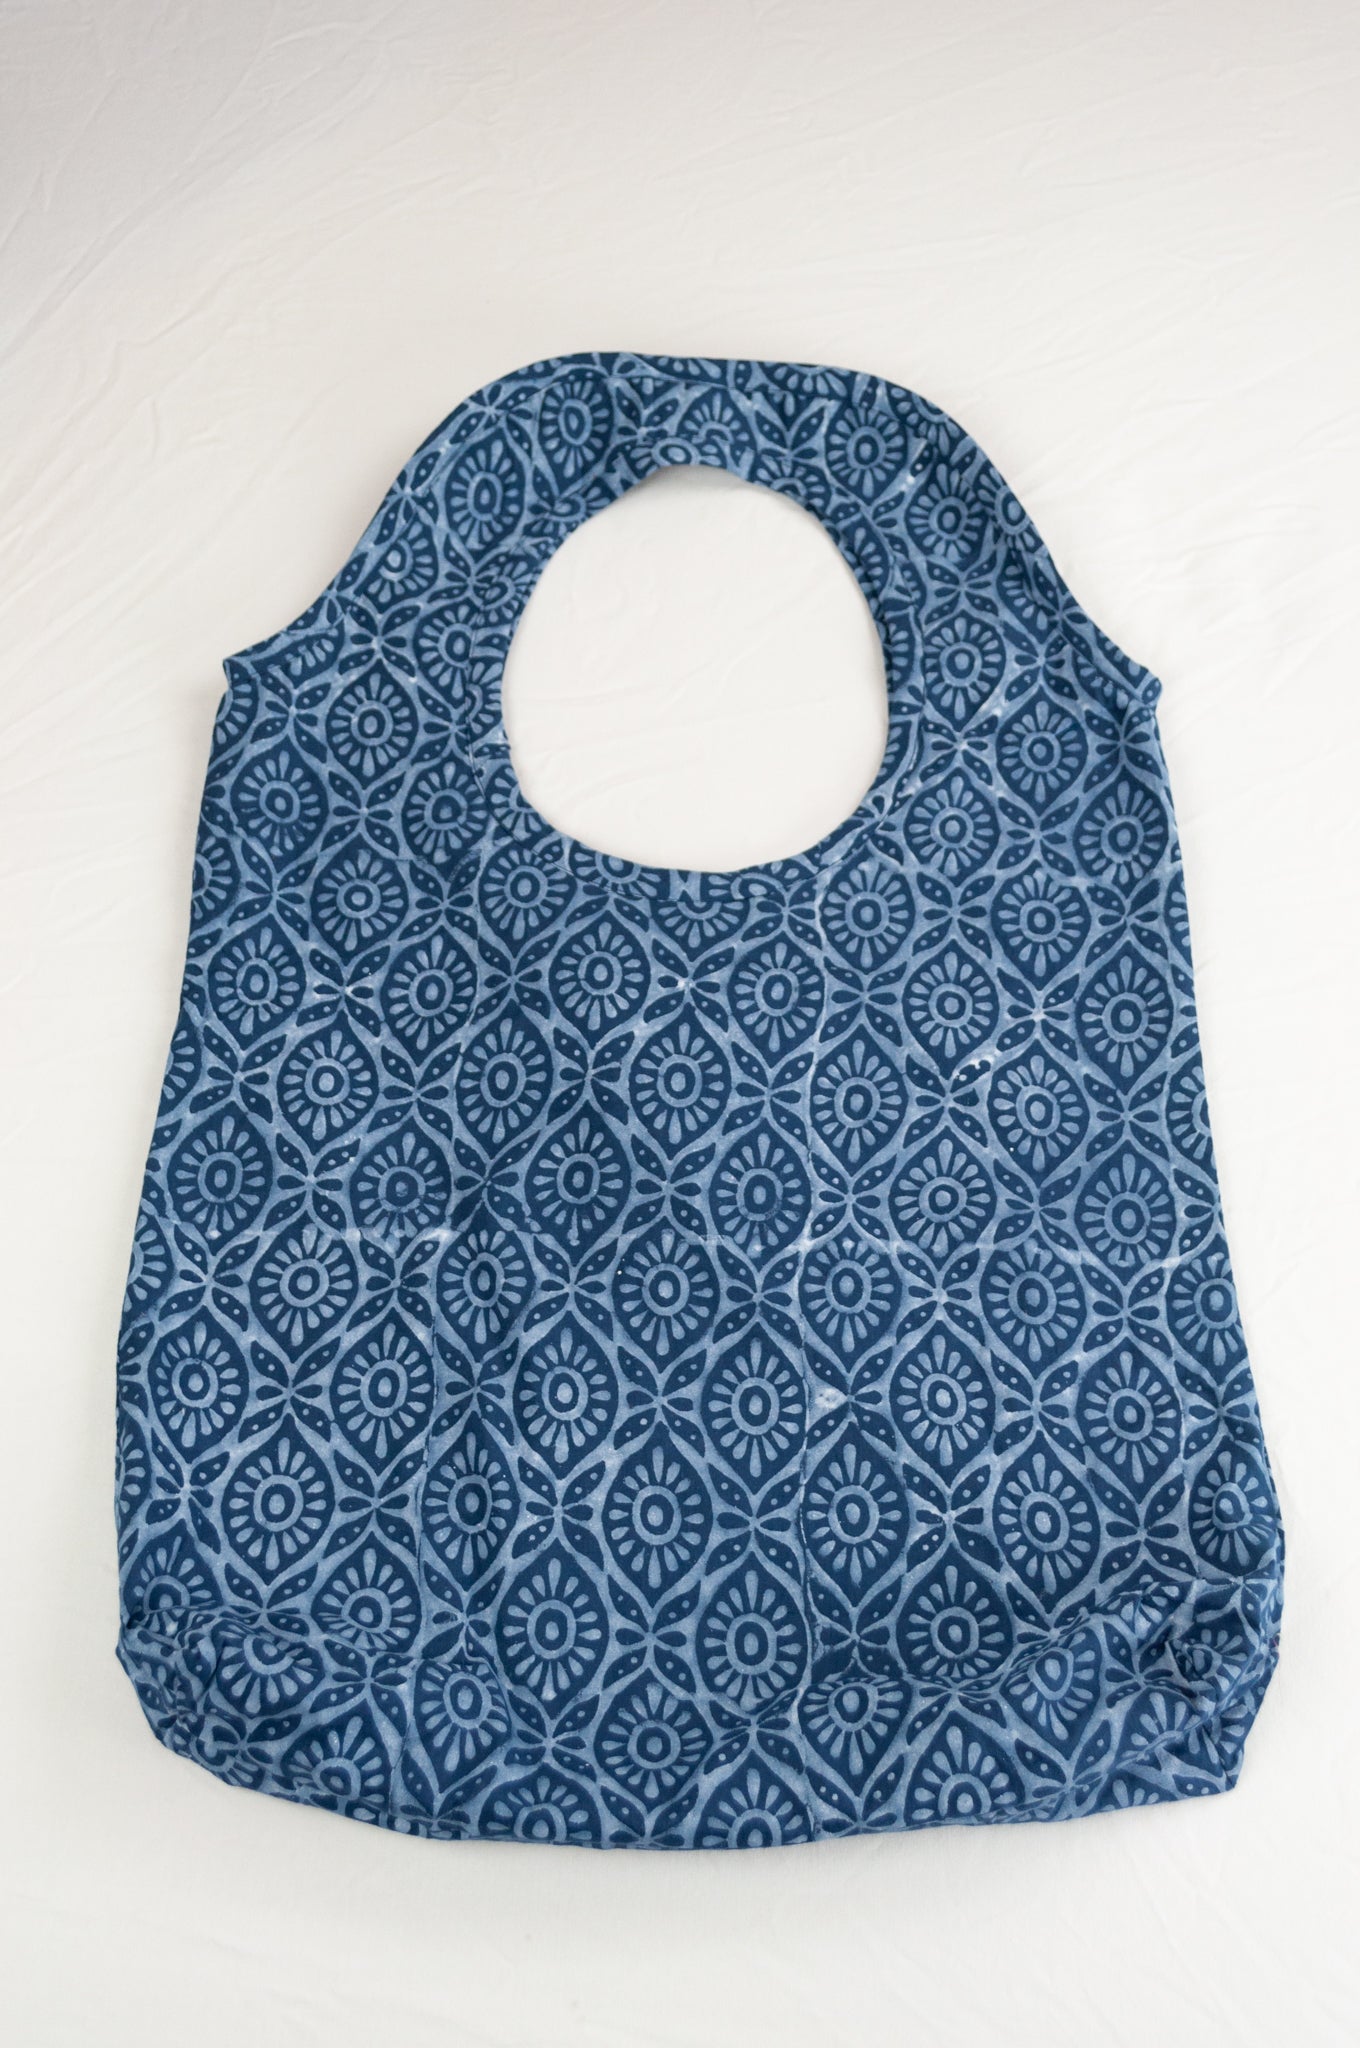 Juniper Hearth block print reusable rollable shopping eco bag, indigo graphic floral pattern.